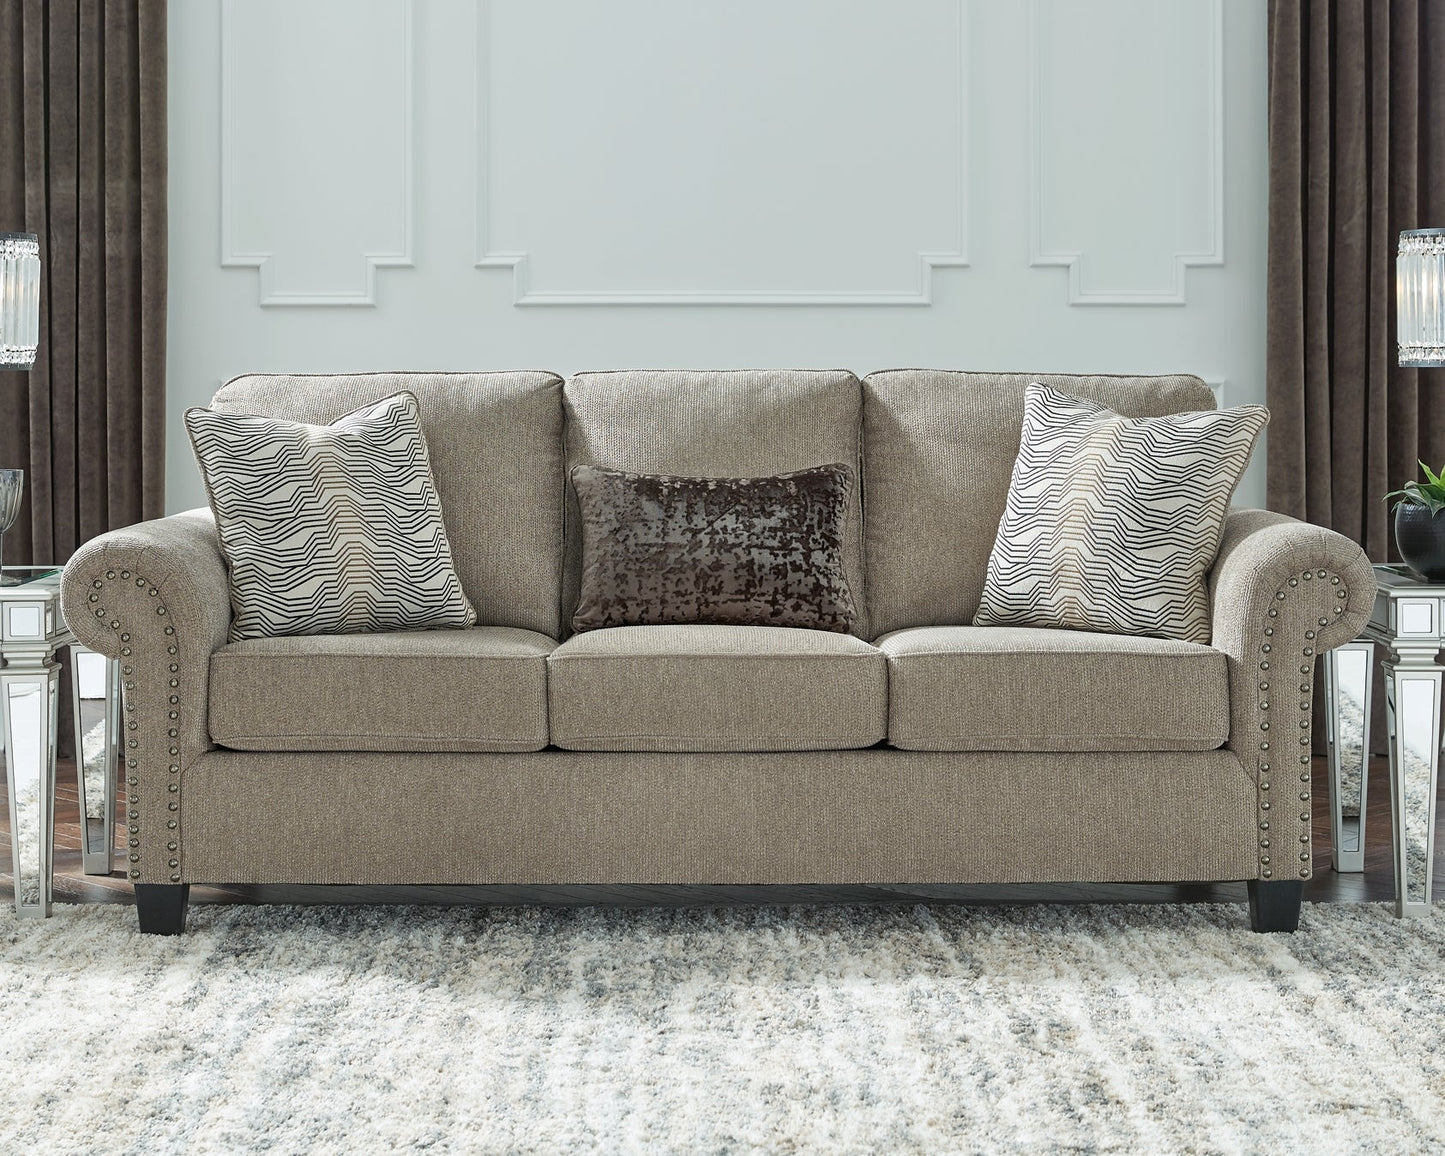 Shewsbury Sofa and Loveseat at Cloud 9 Mattress & Furniture furniture, home furnishing, home decor